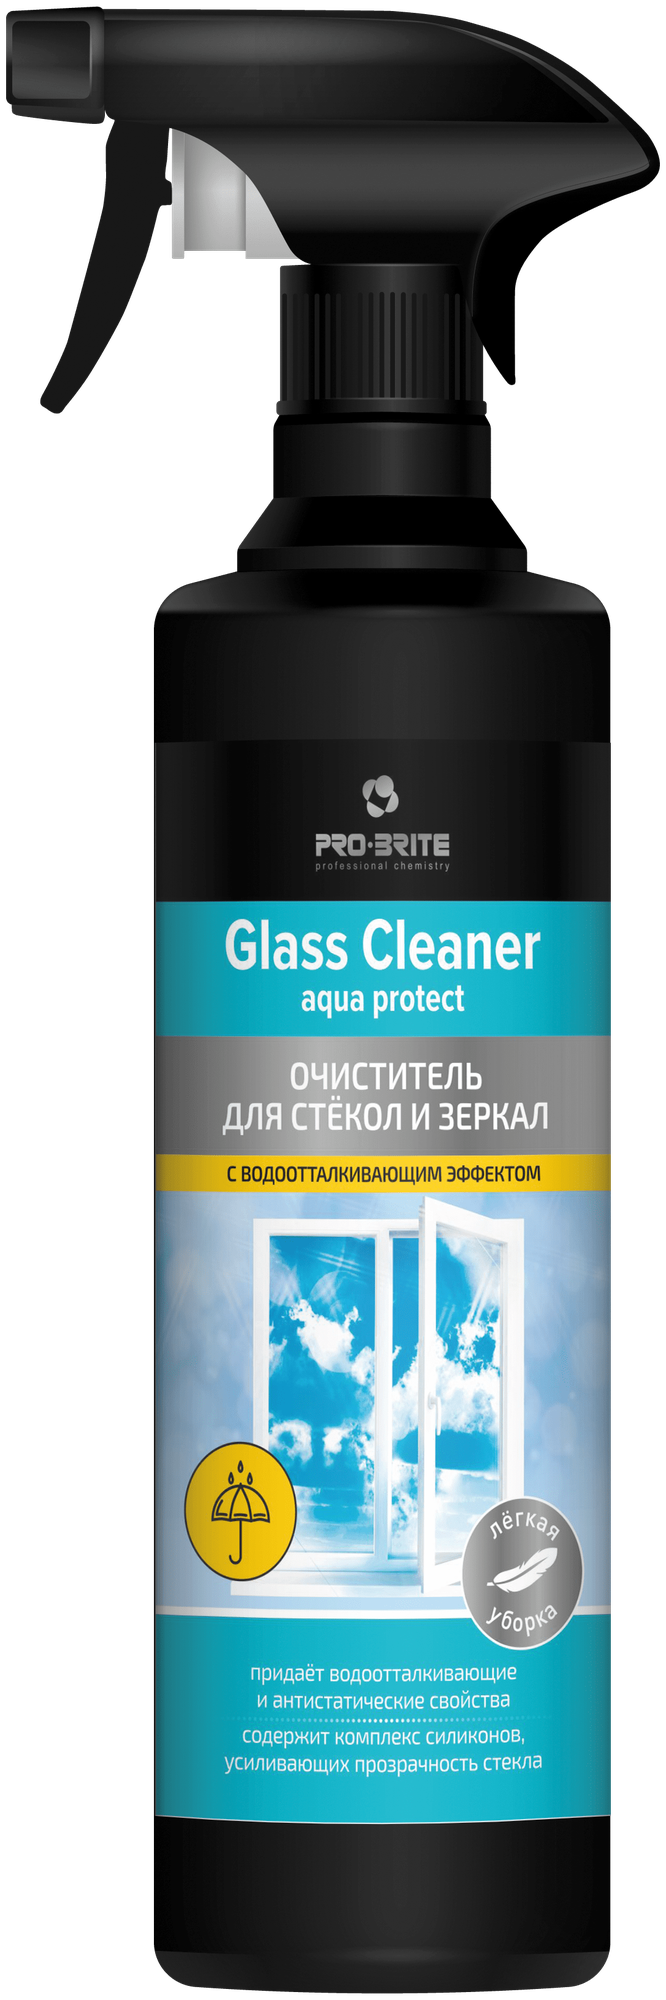 Pro Brite 1522-05 «Glass cleaner aqua protect Очиститель для стёкол и зеркал» 05л